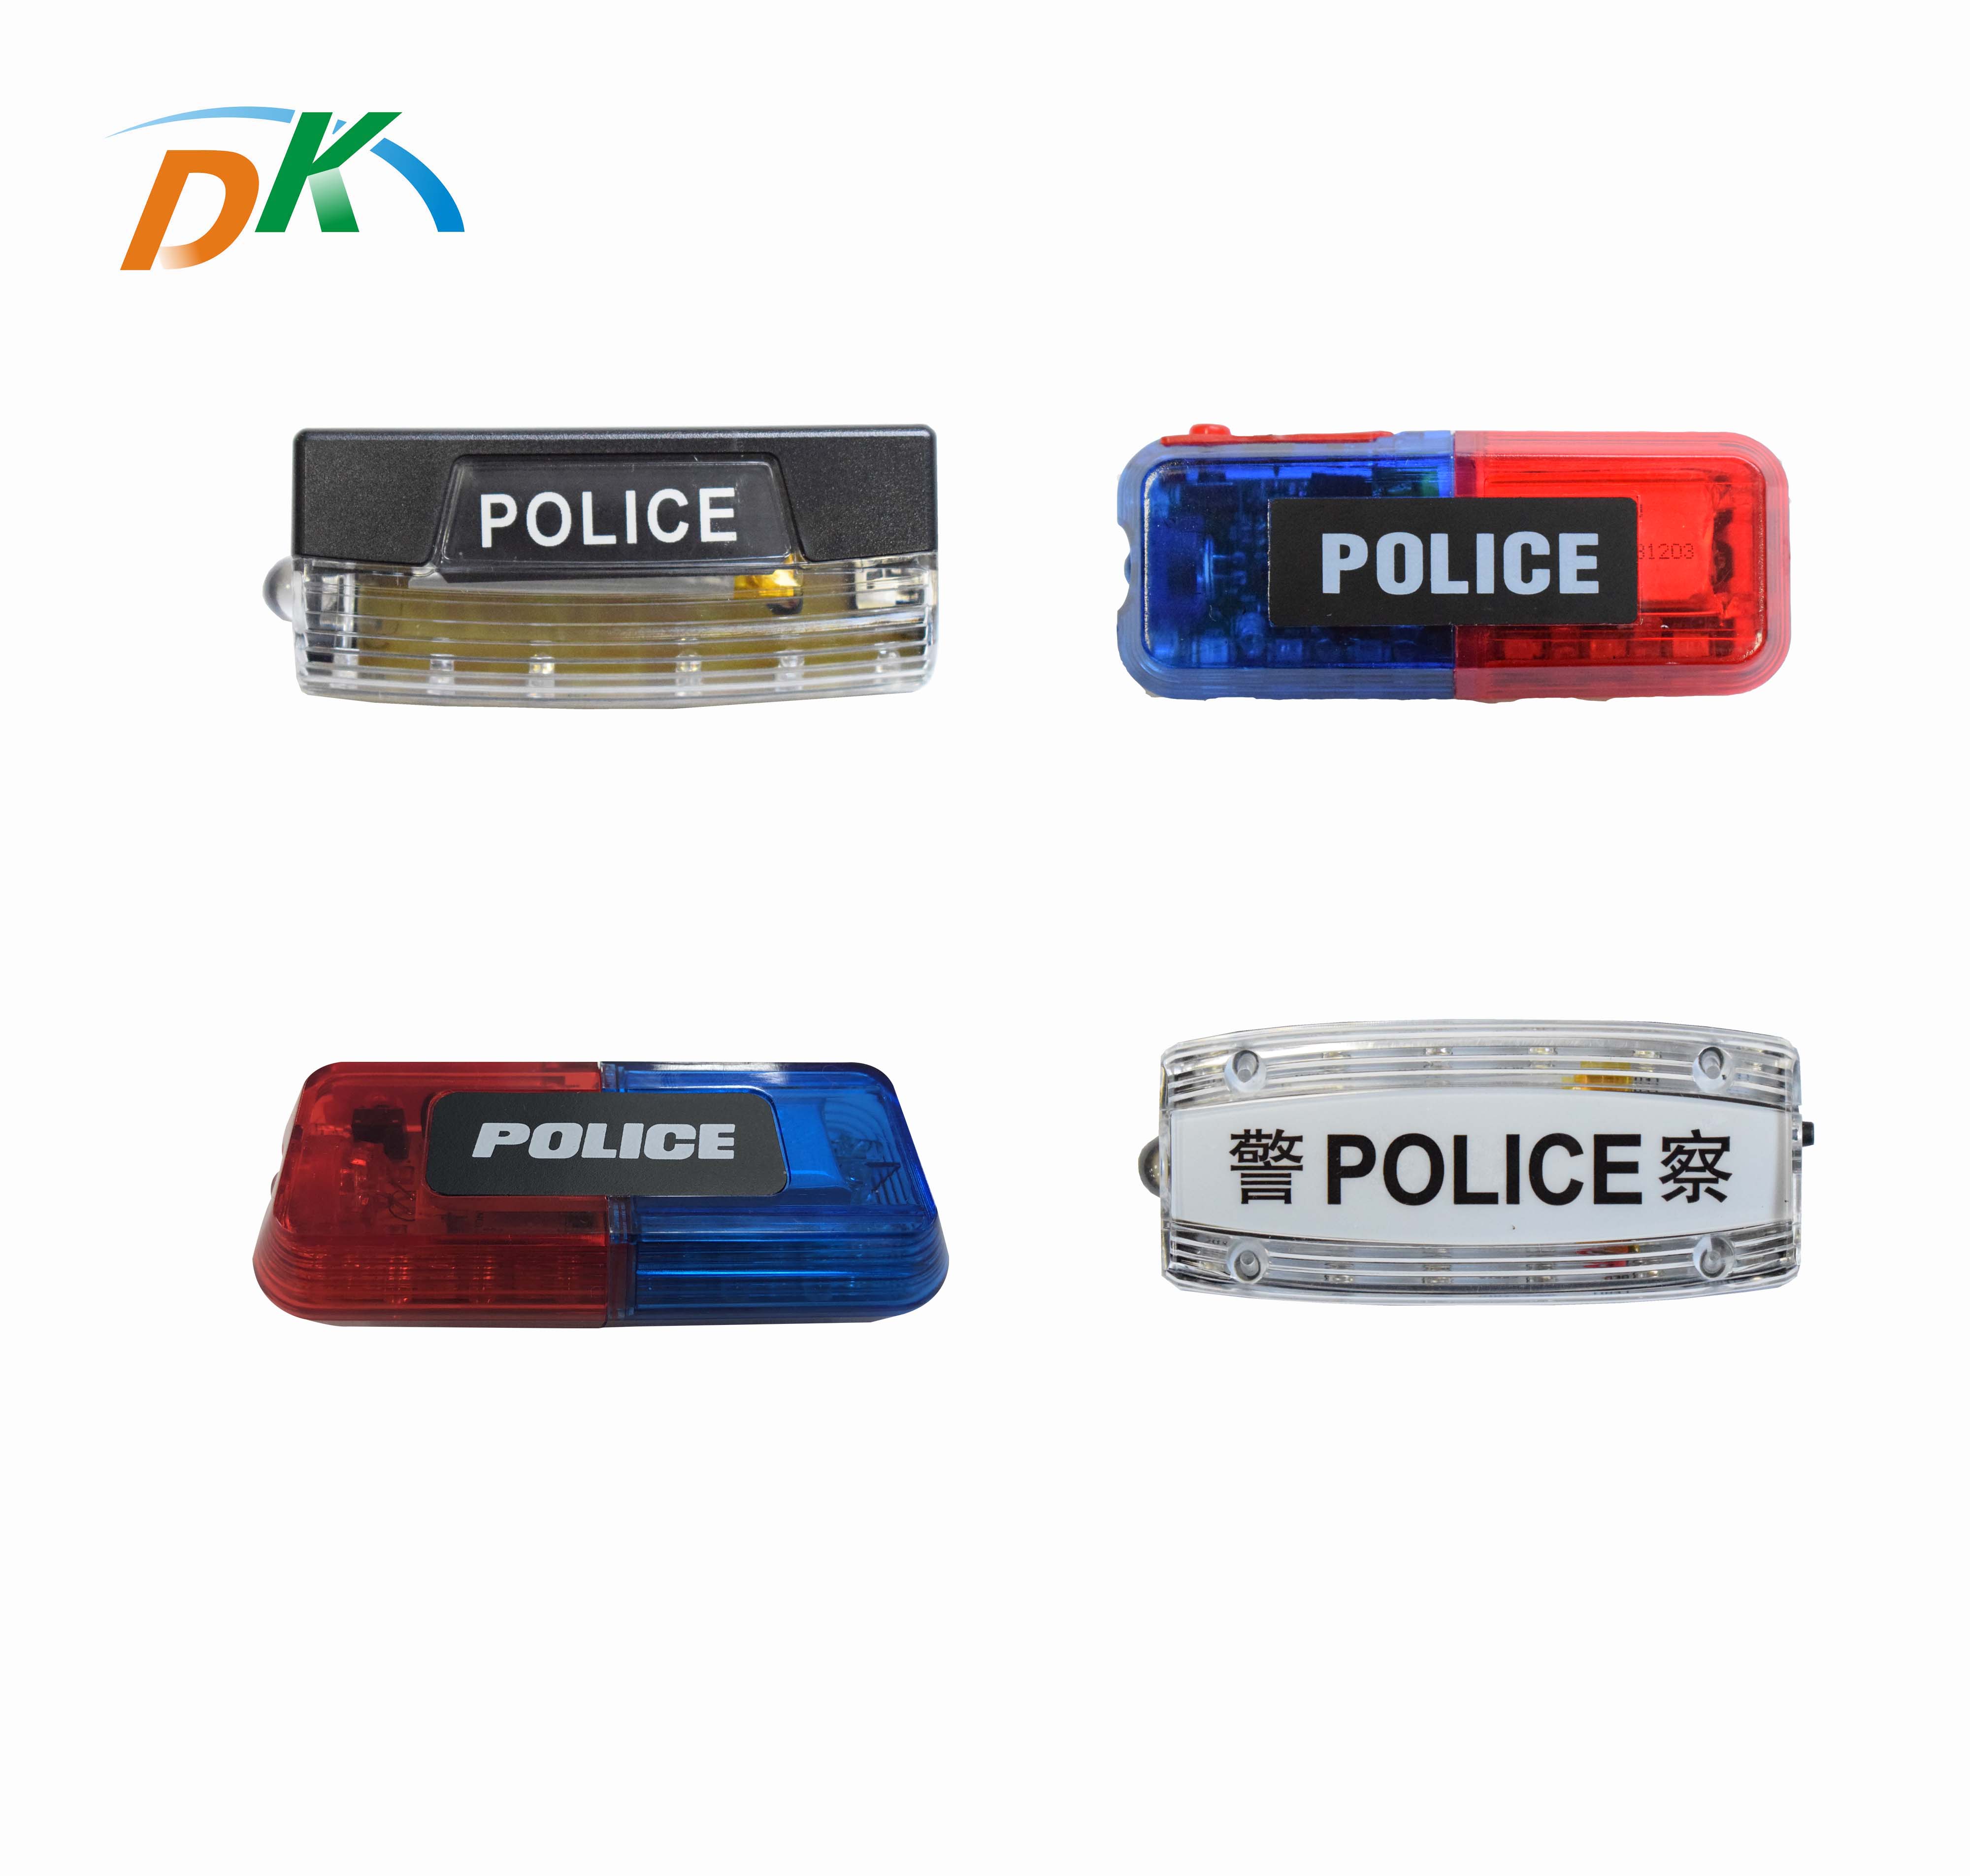 DK LED Mini traffic warning light for police shoulder light with high brightness